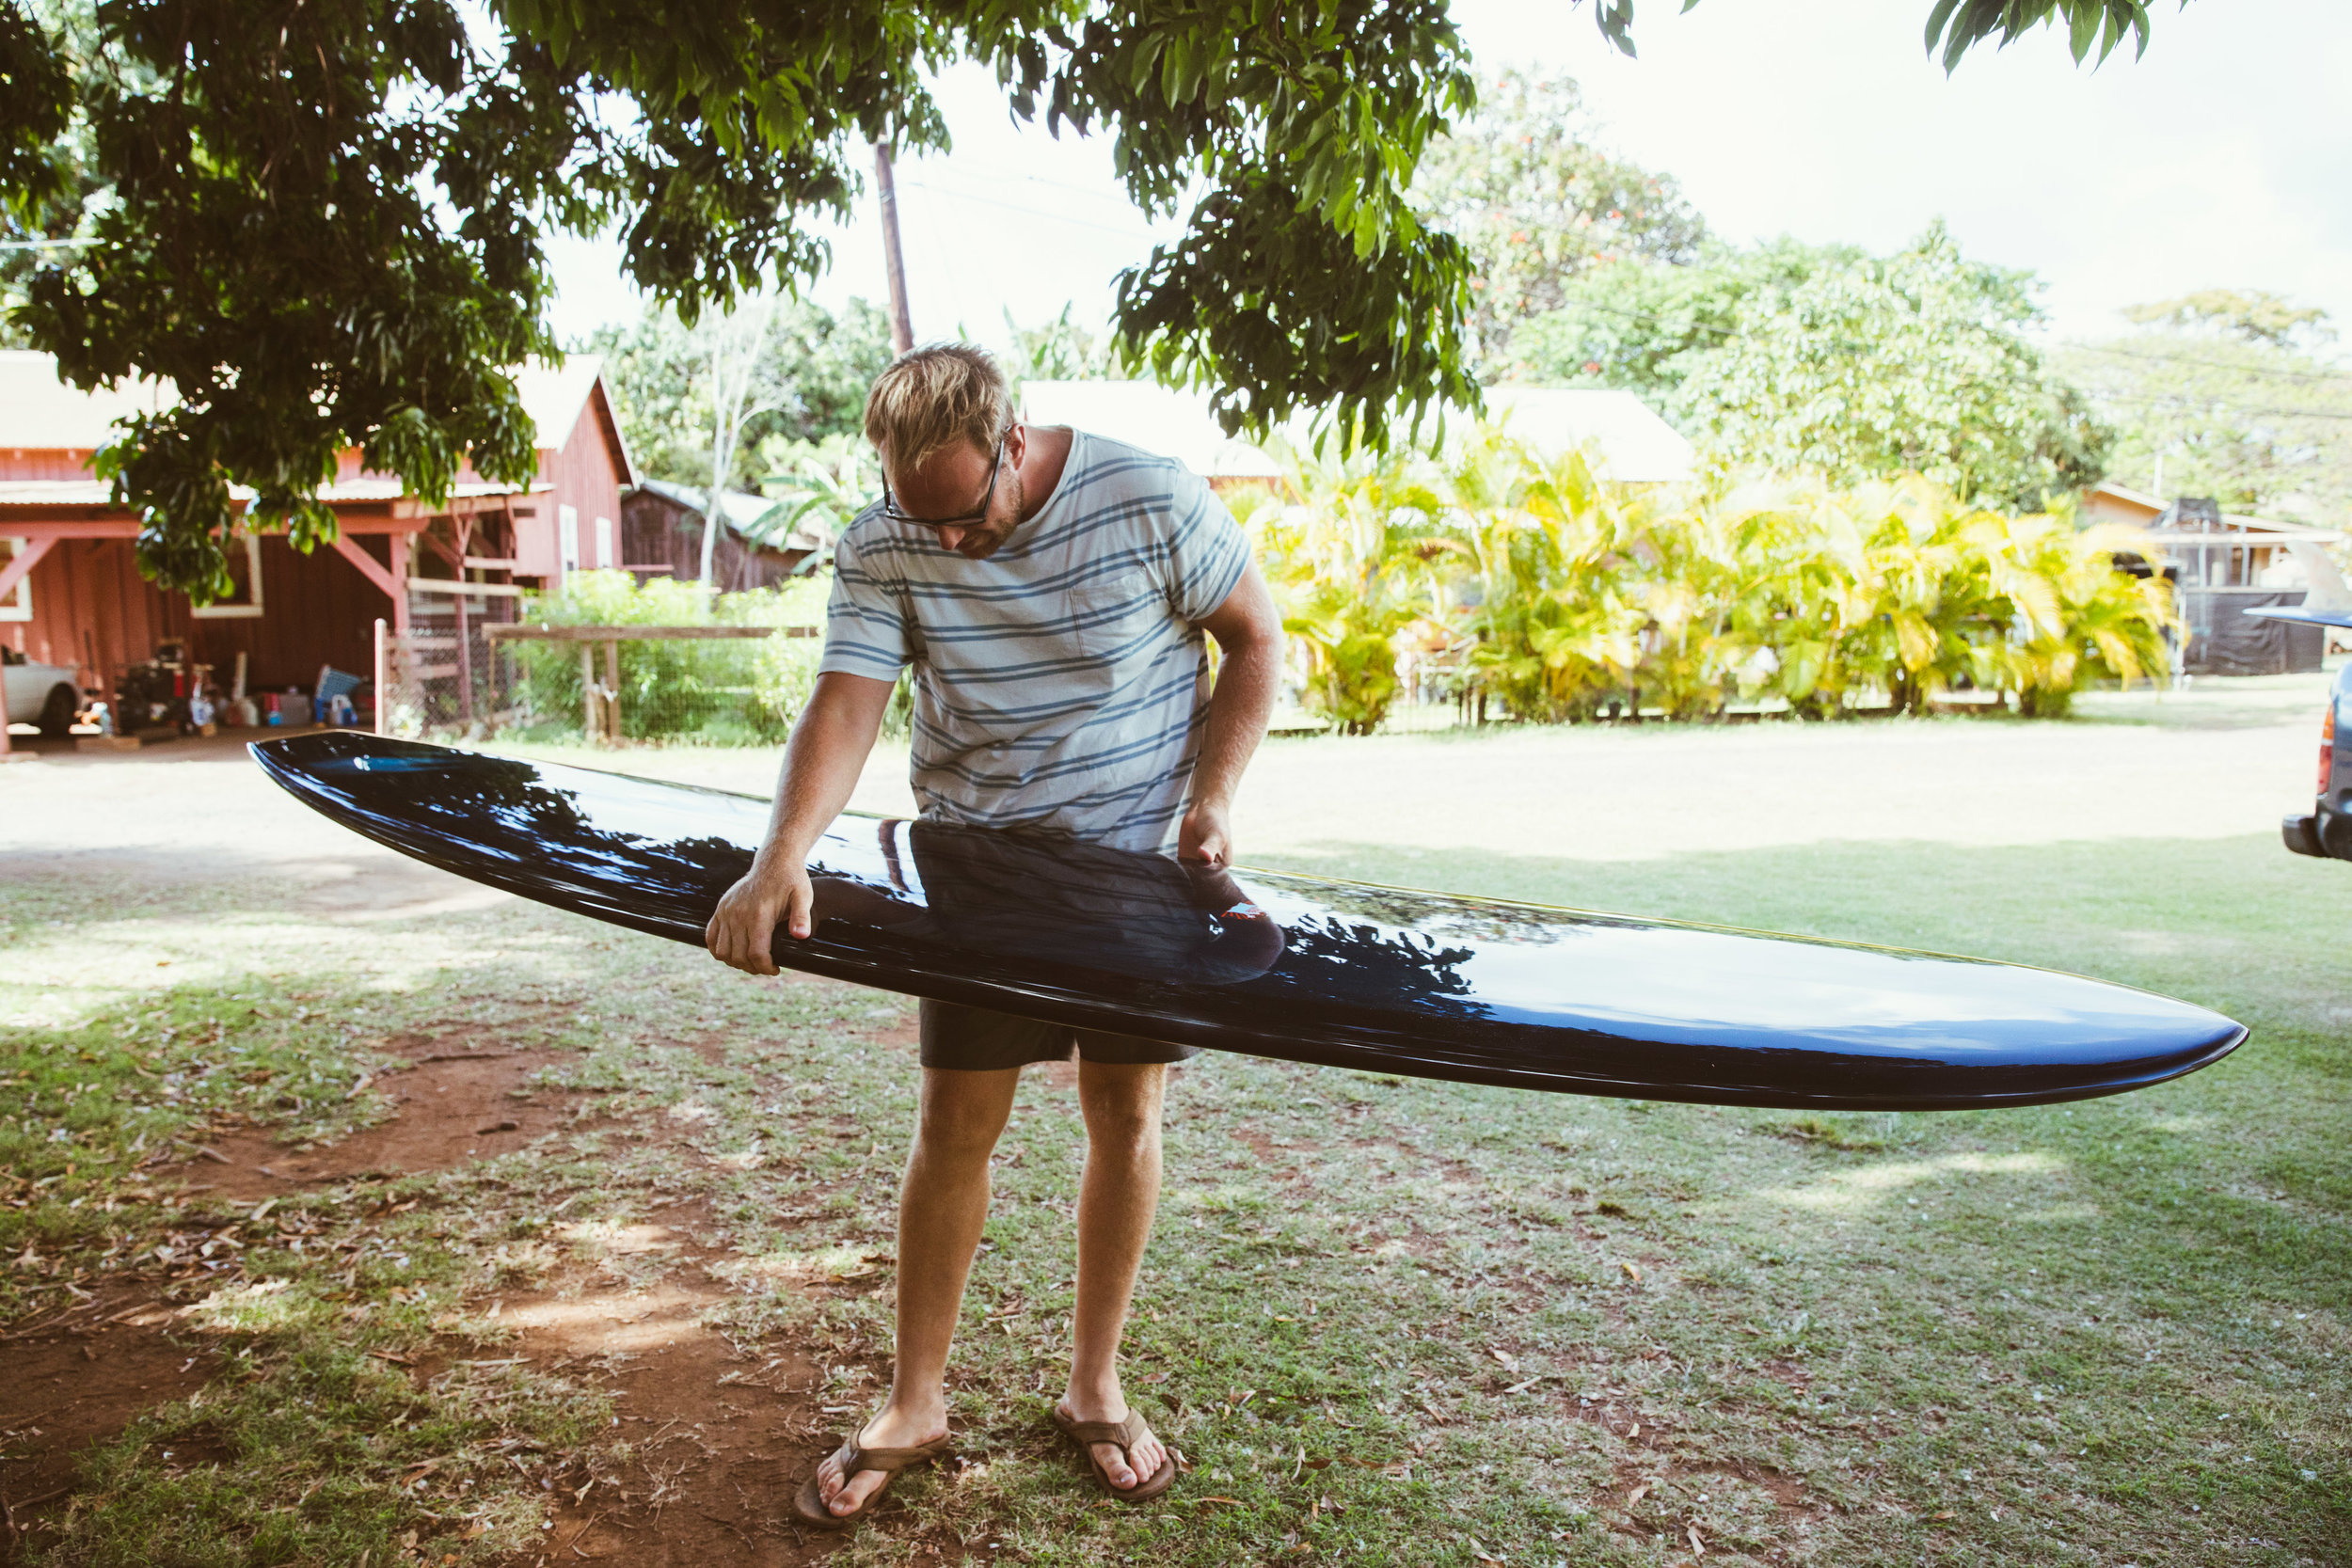 bryce johnson-photography-ebert surfboards-kauai-33.jpg